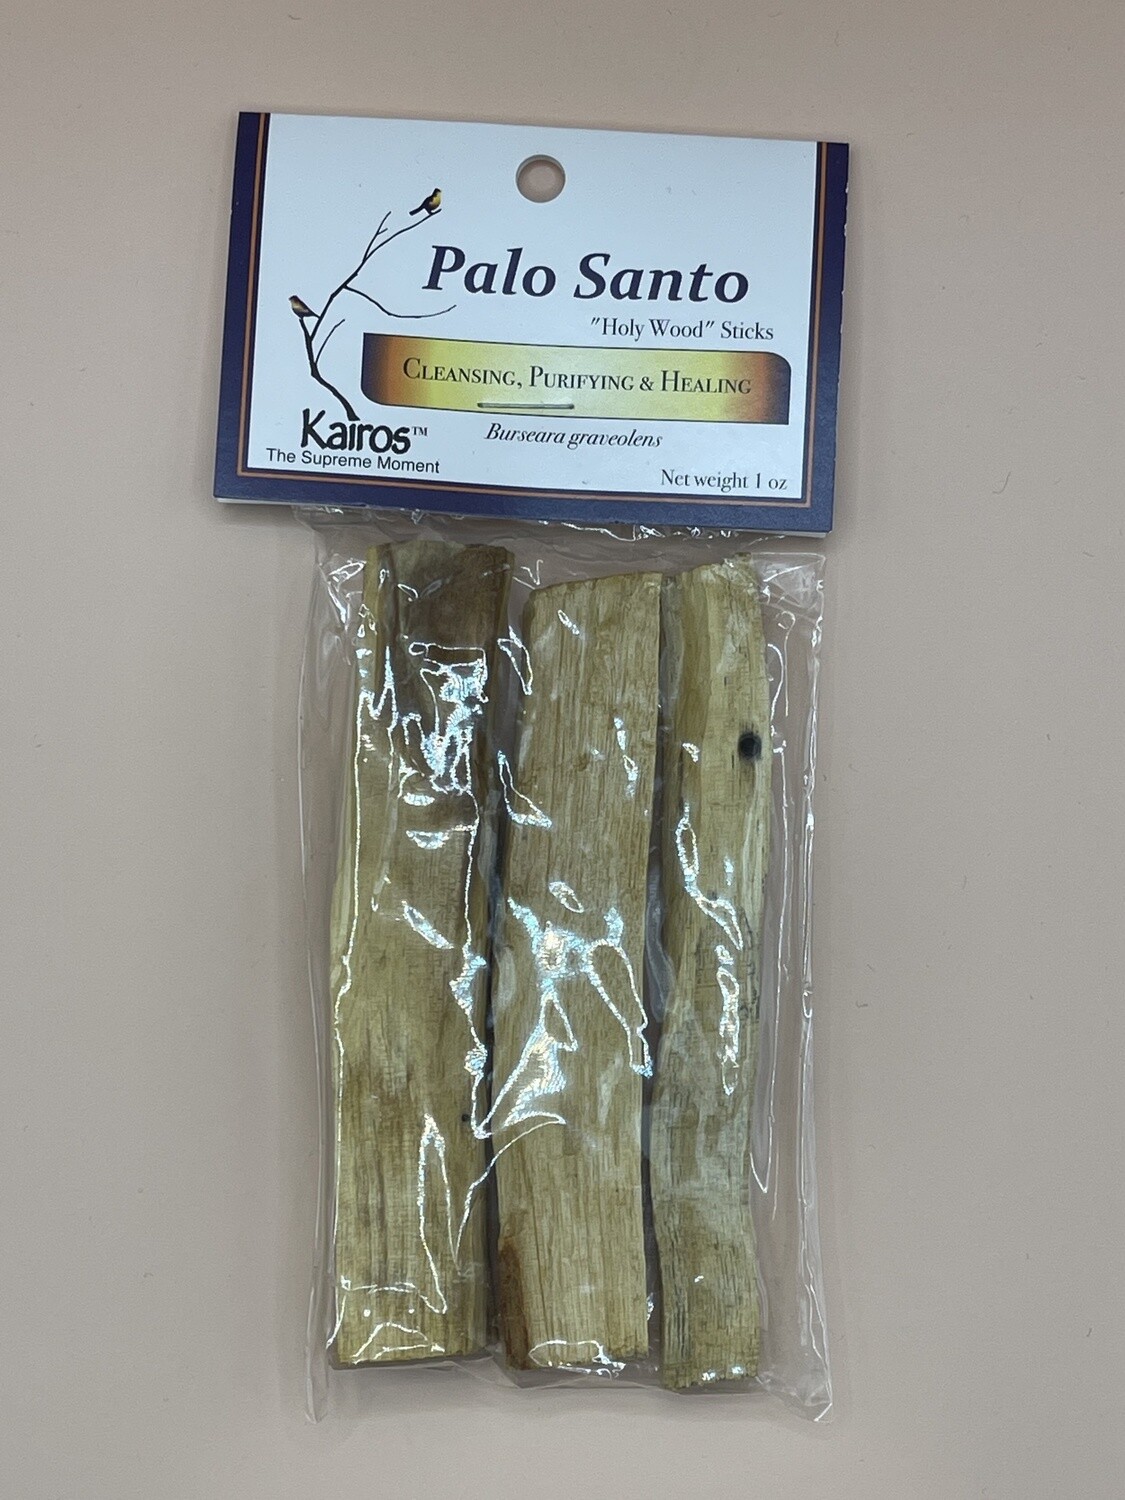 Palo Santo Sticks Packaged